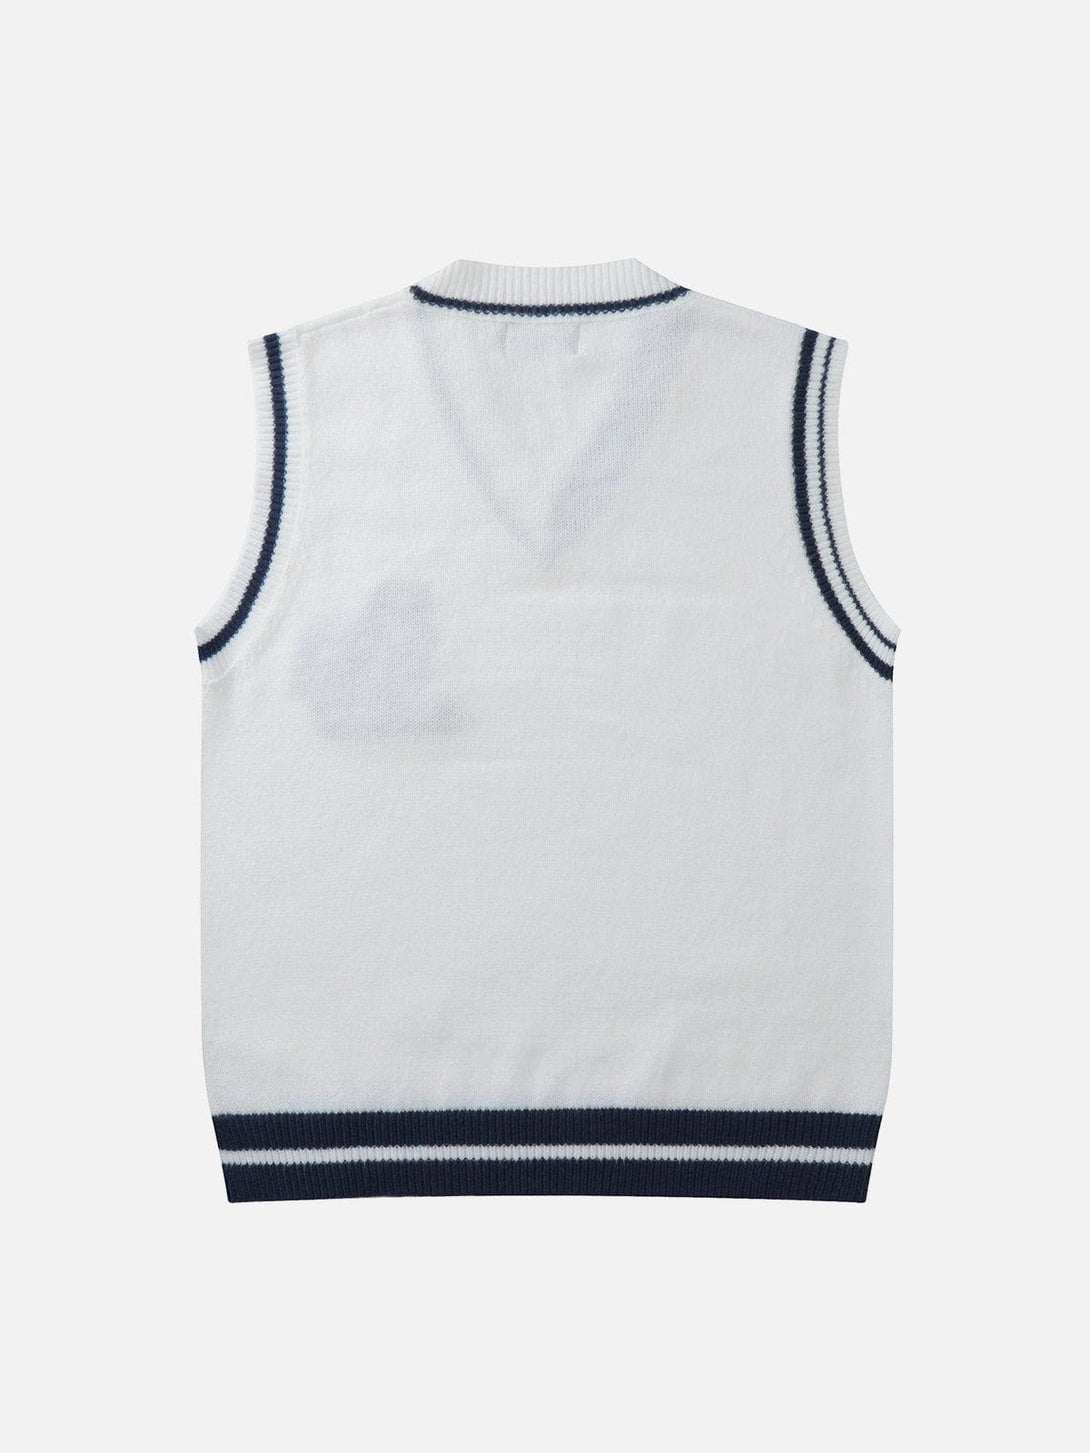 Levefly - "AS" Jacquard Sweater Vest - Streetwear Fashion - levefly.com